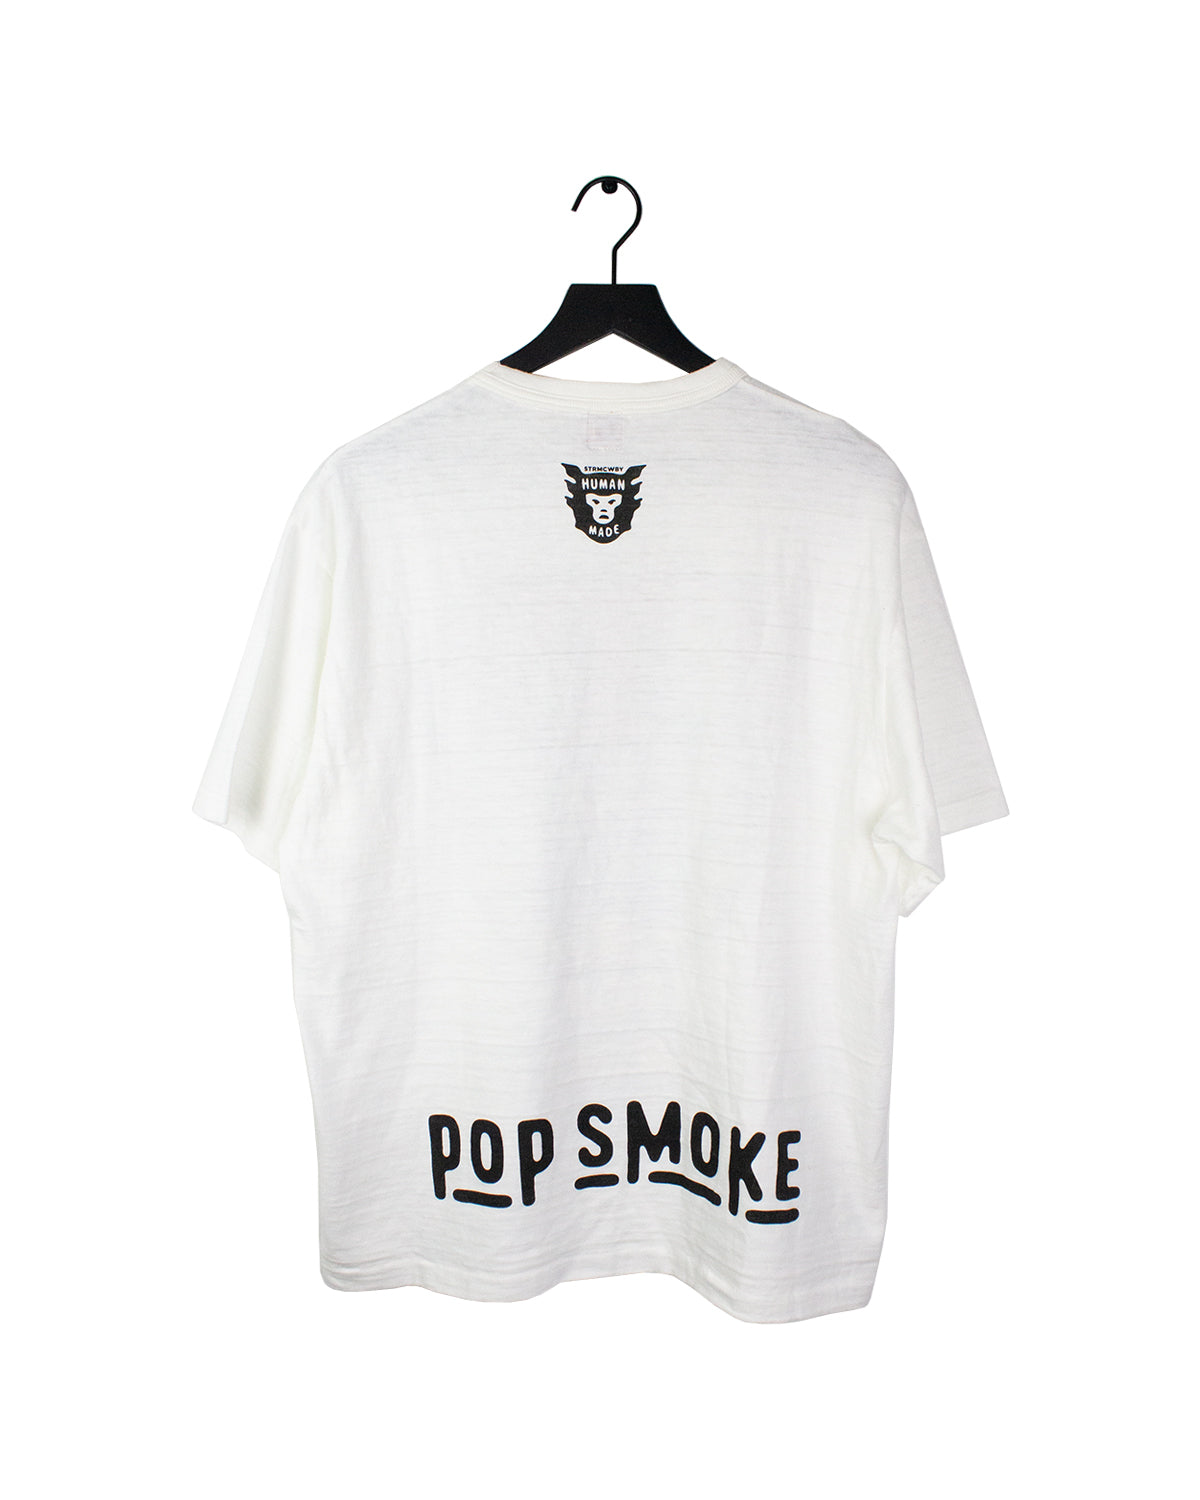 HUMANMADE/POP SMOKE T-SHIRT